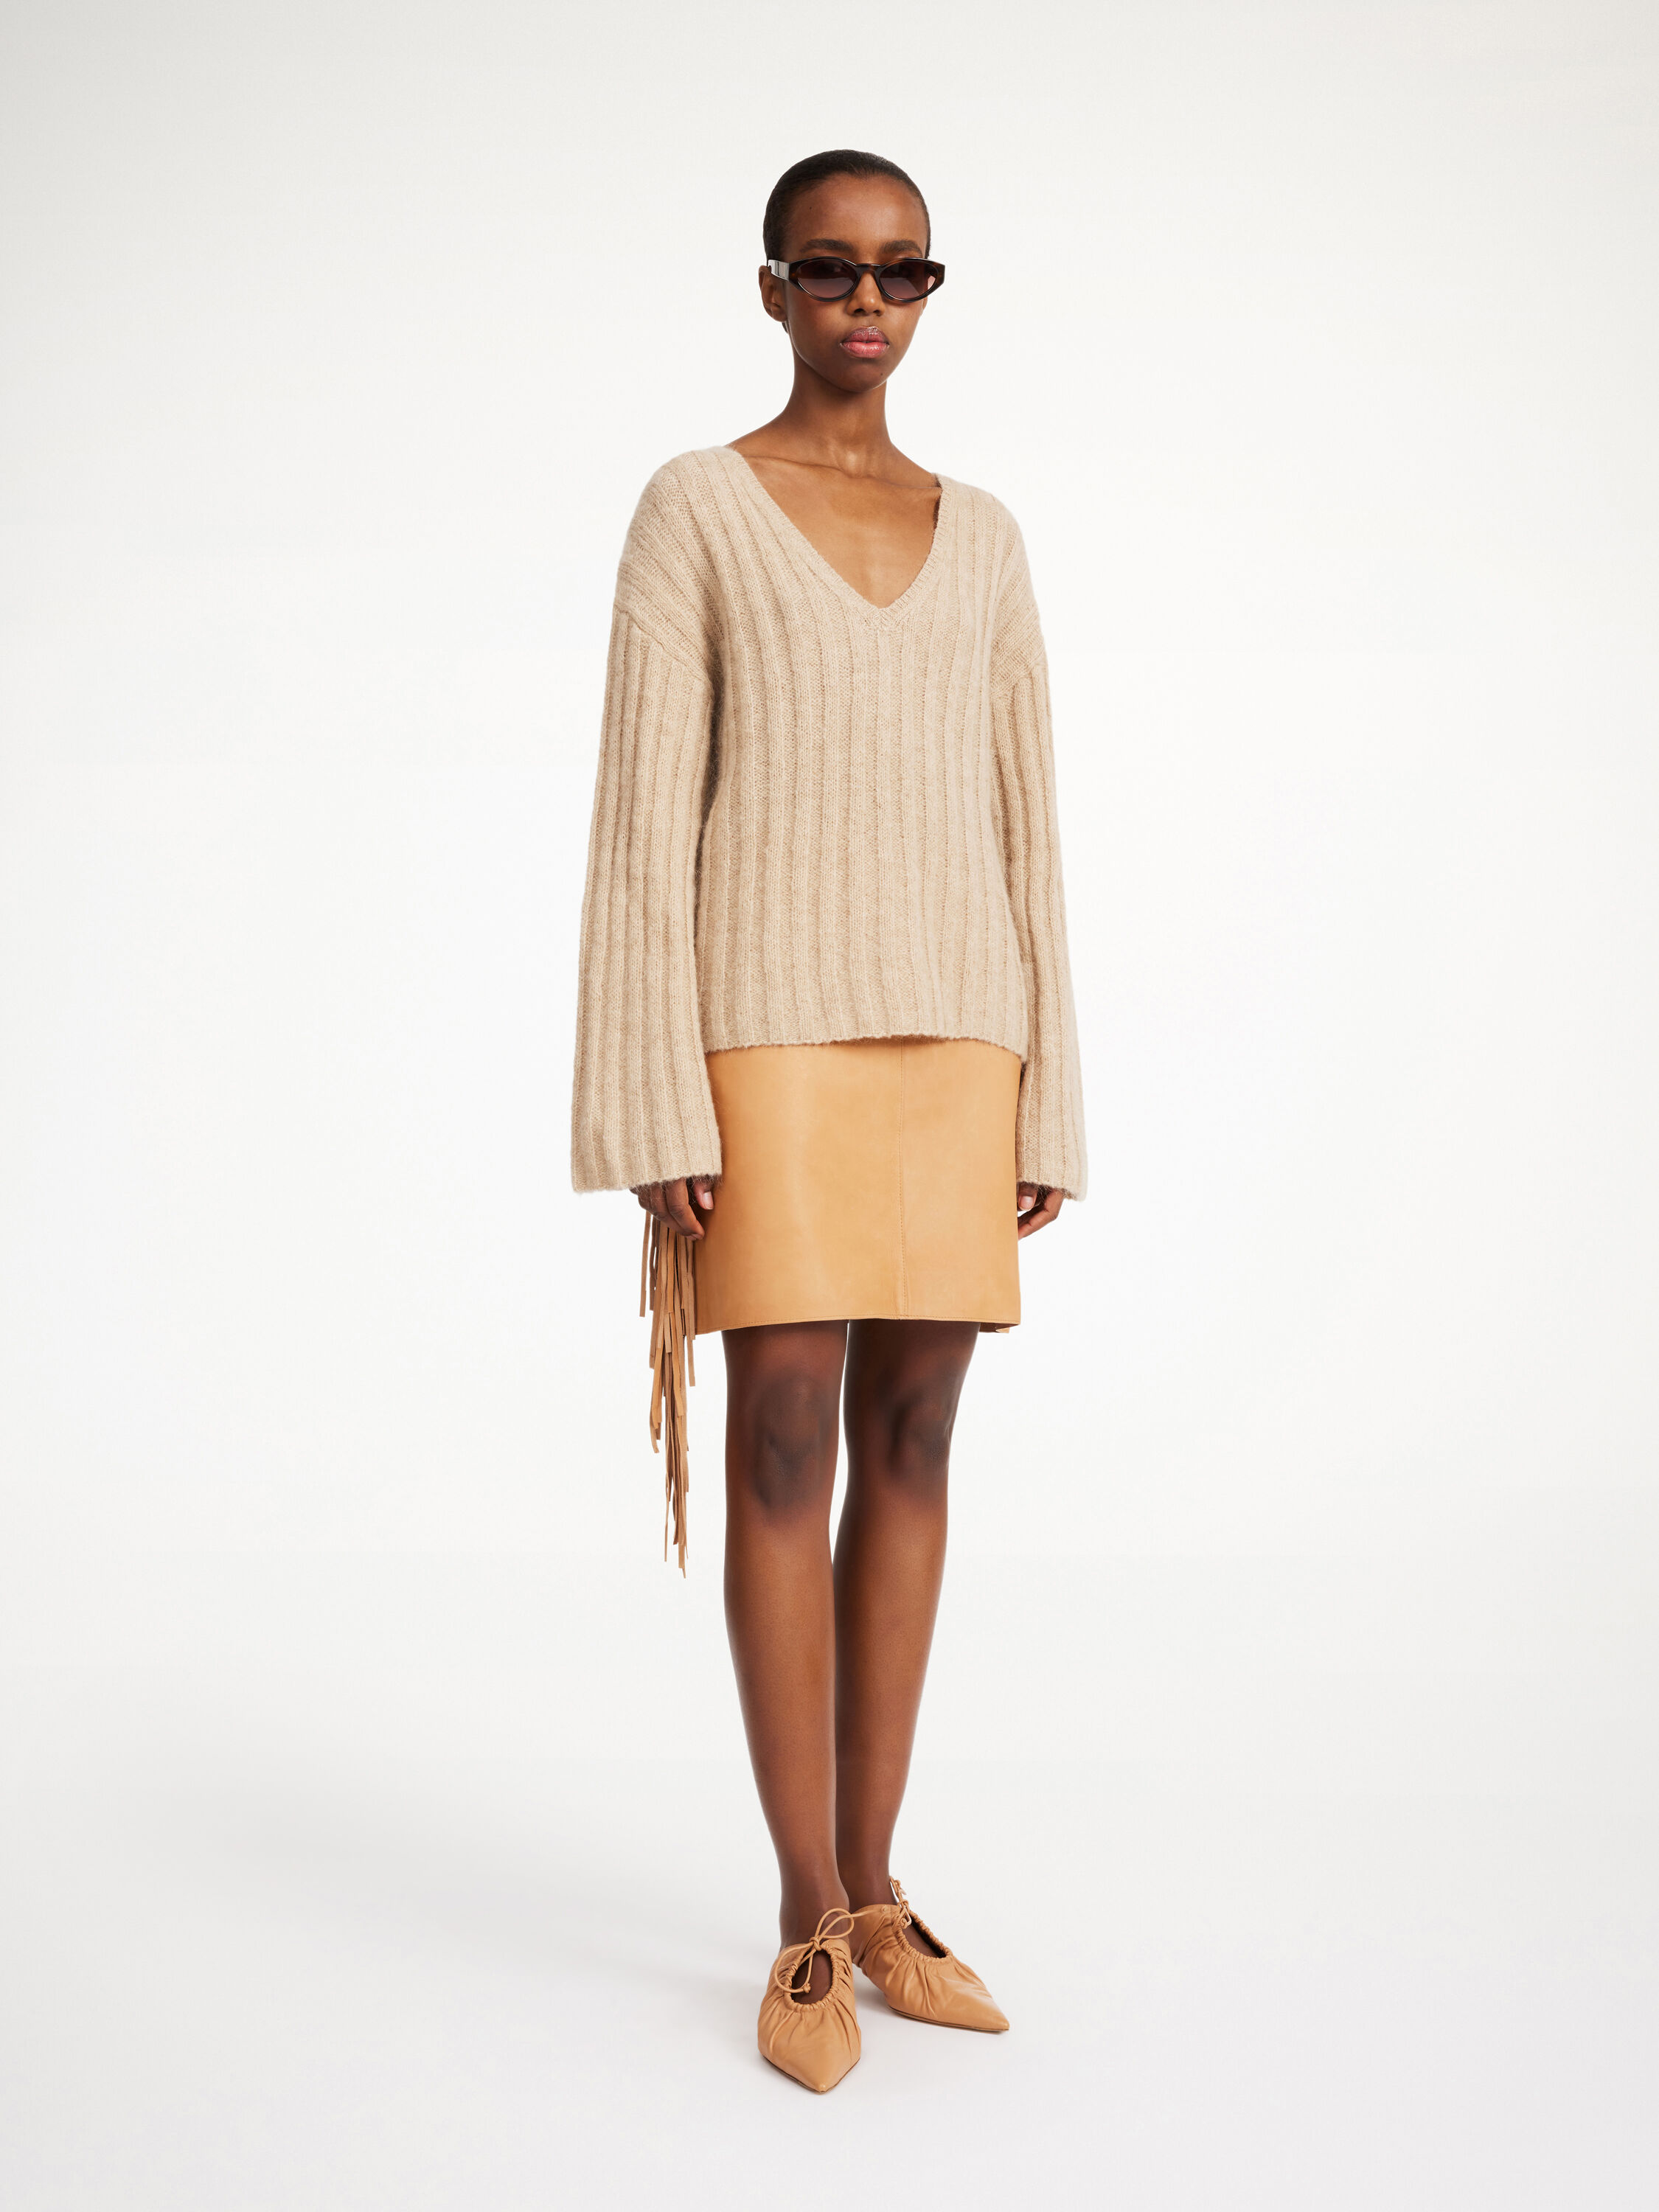 Knitwear | See all styles here | By Malene Birger